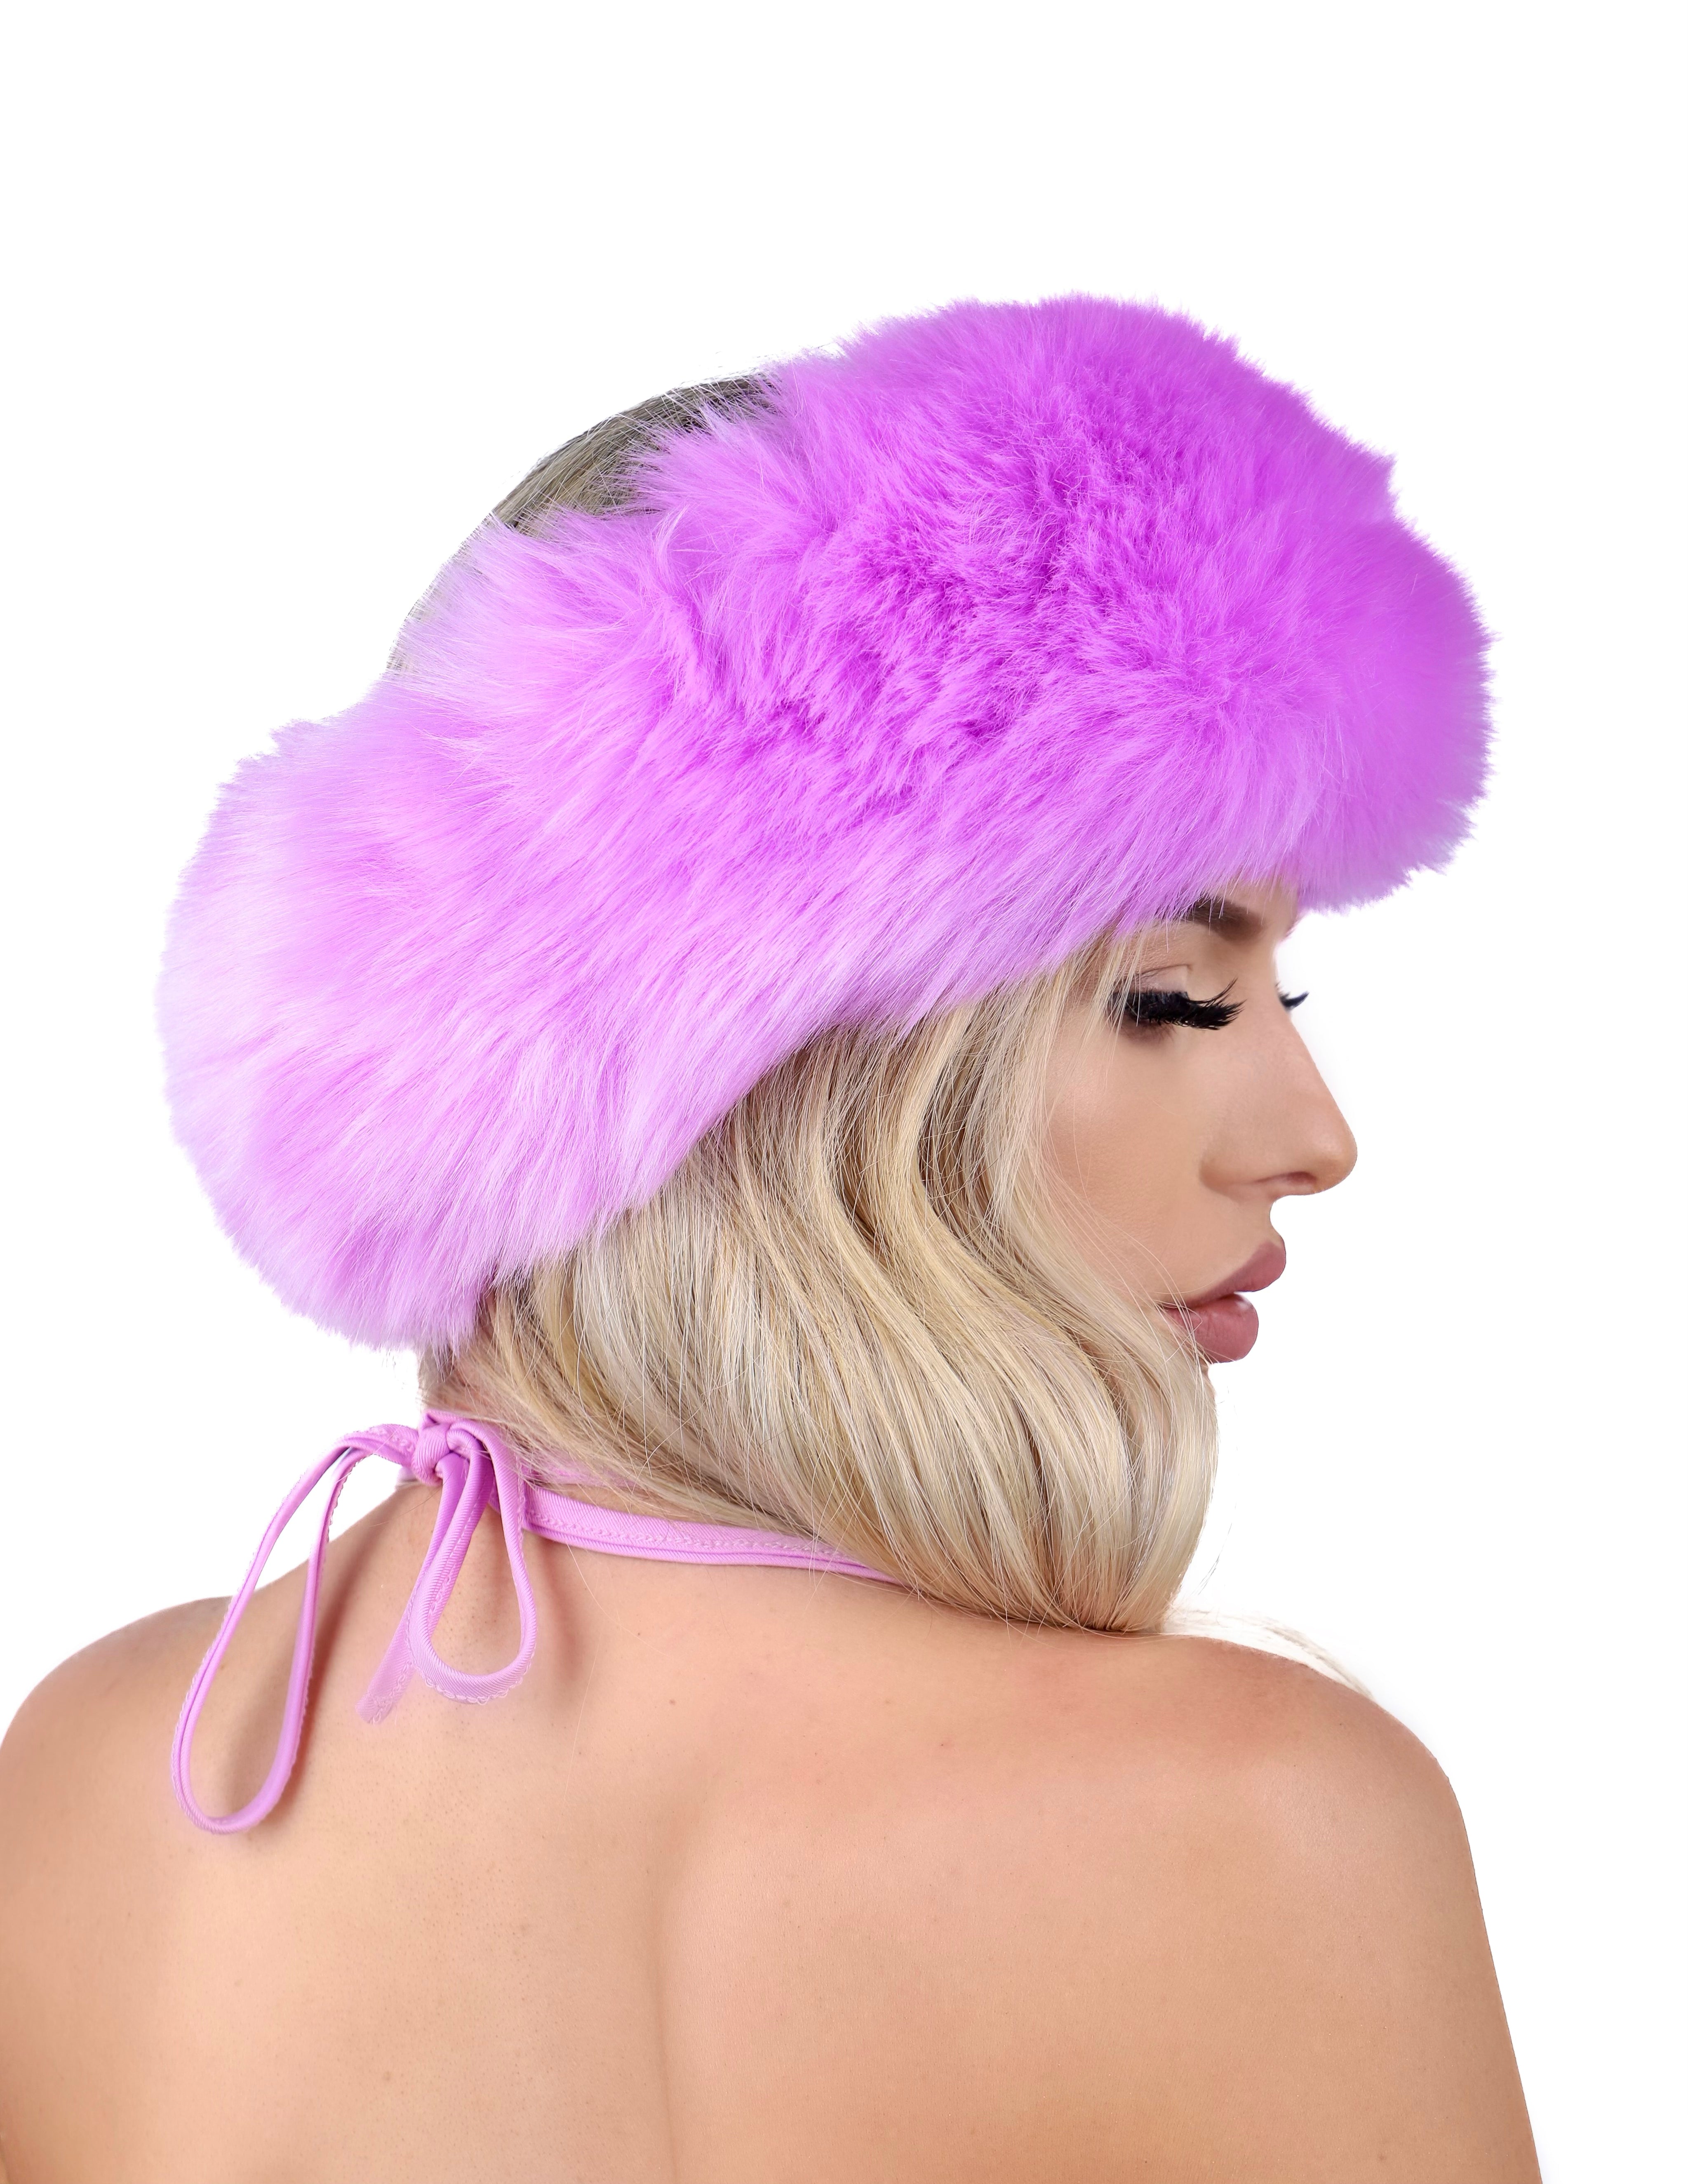 Lavender Fuzzy Headband